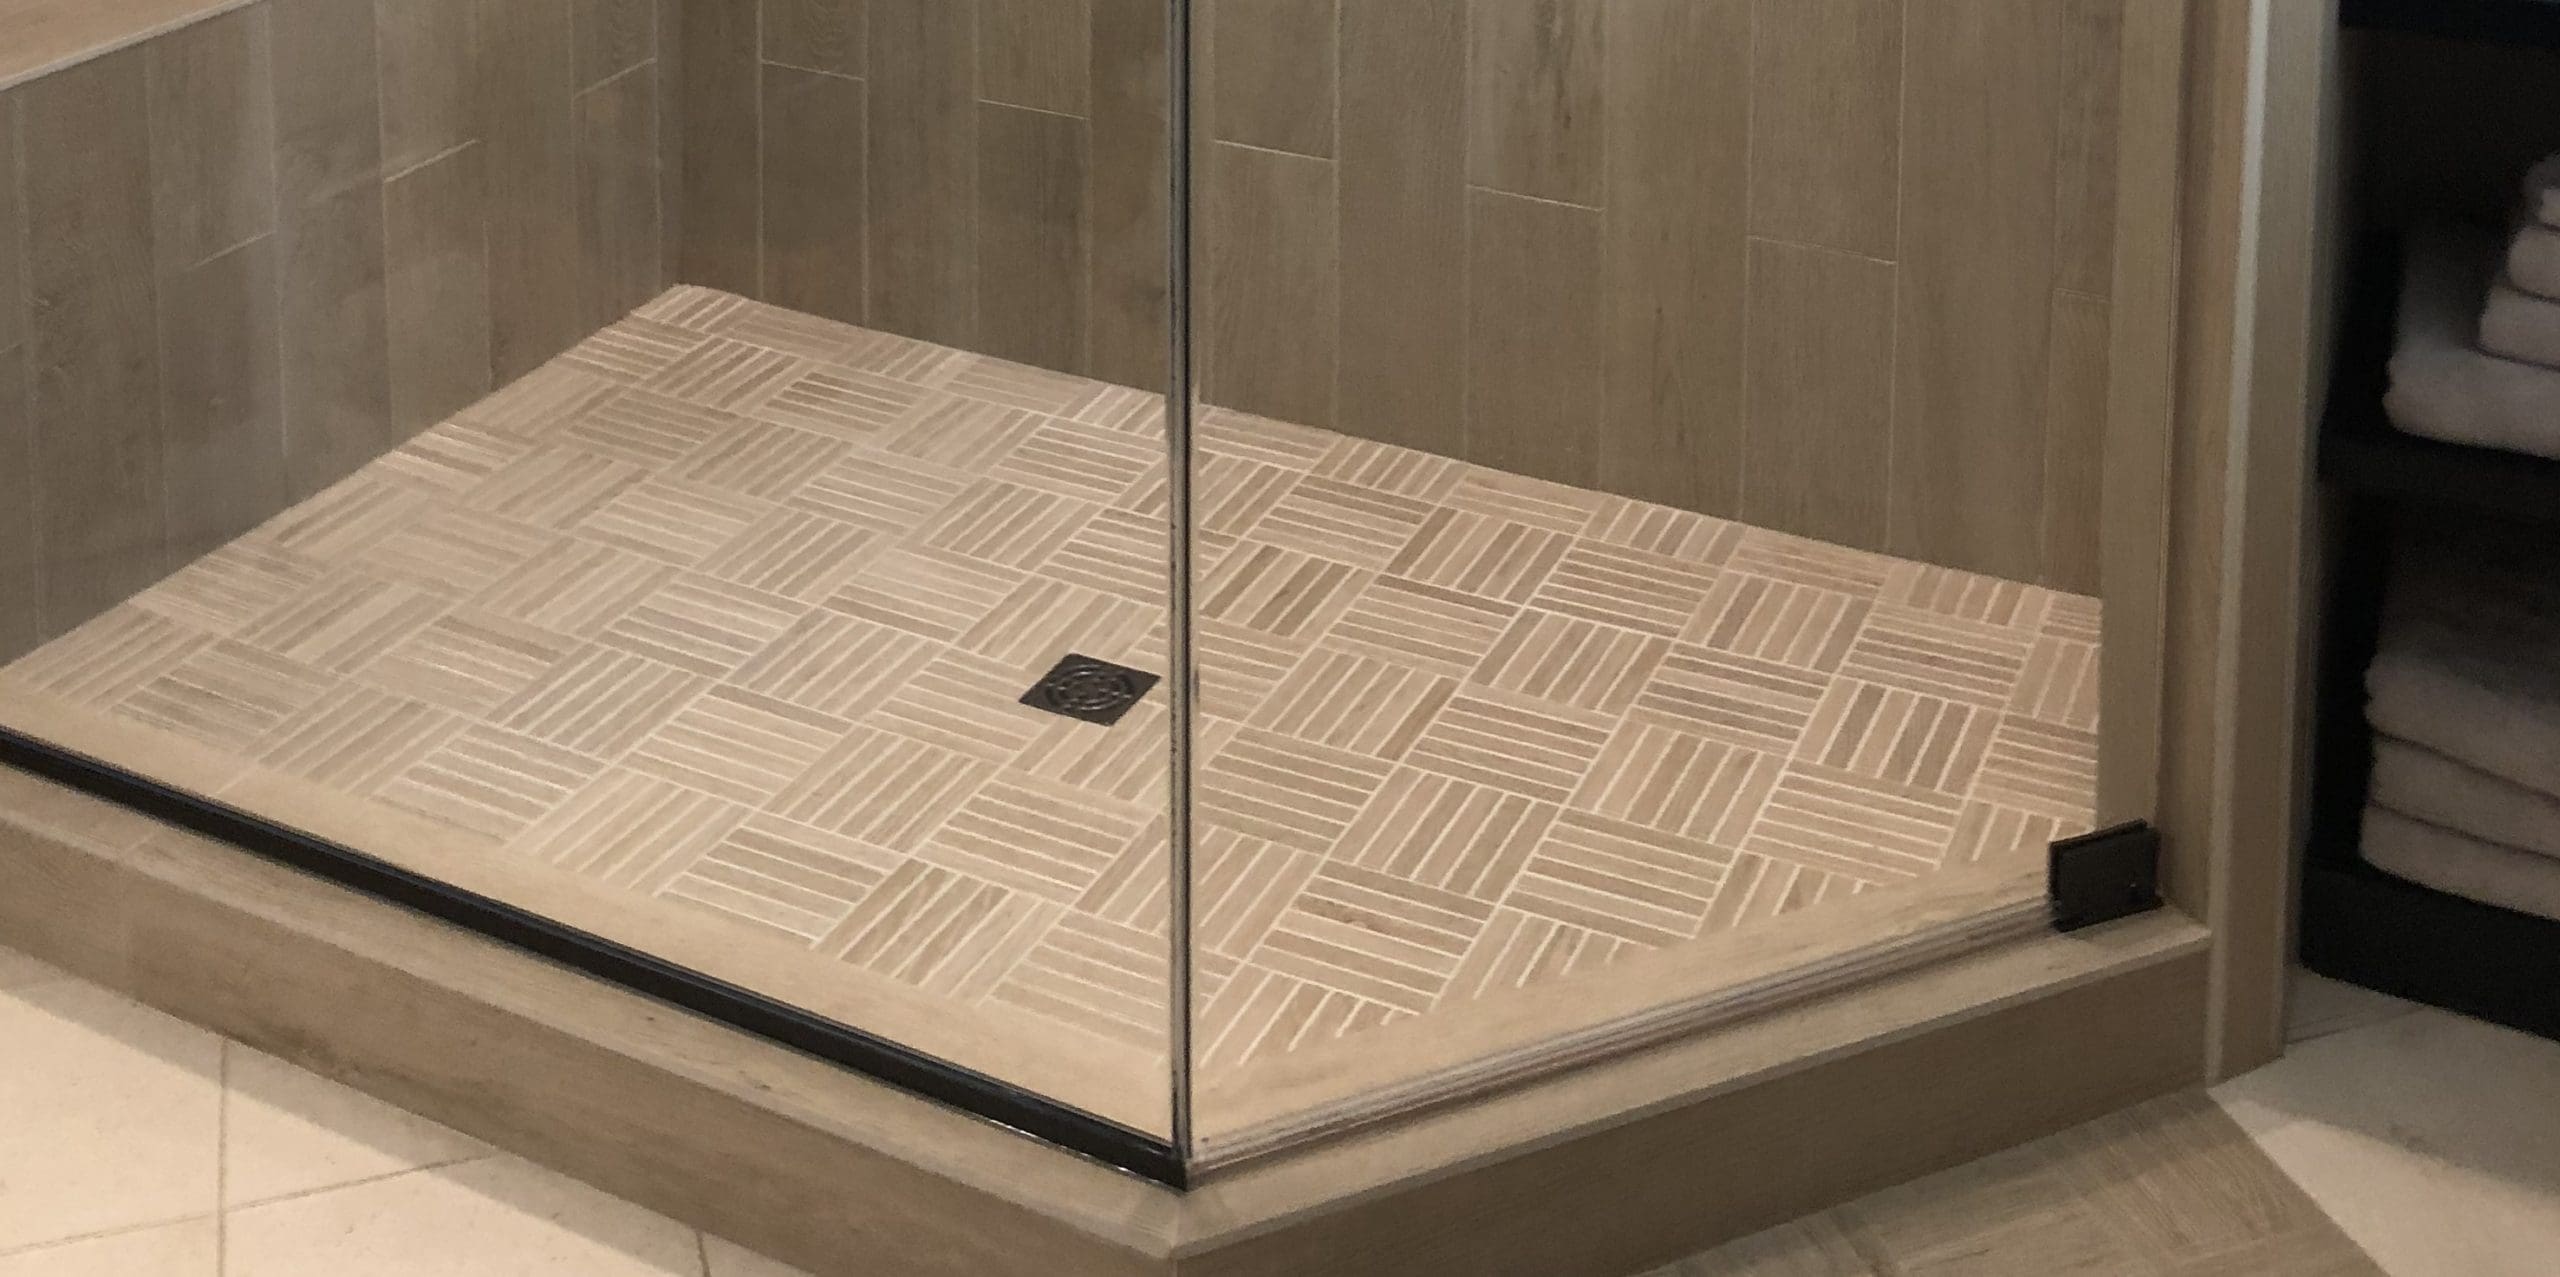 Shower Pans Tile Vs Solid Surface, Is Ceramic Tile Good For Shower Floors